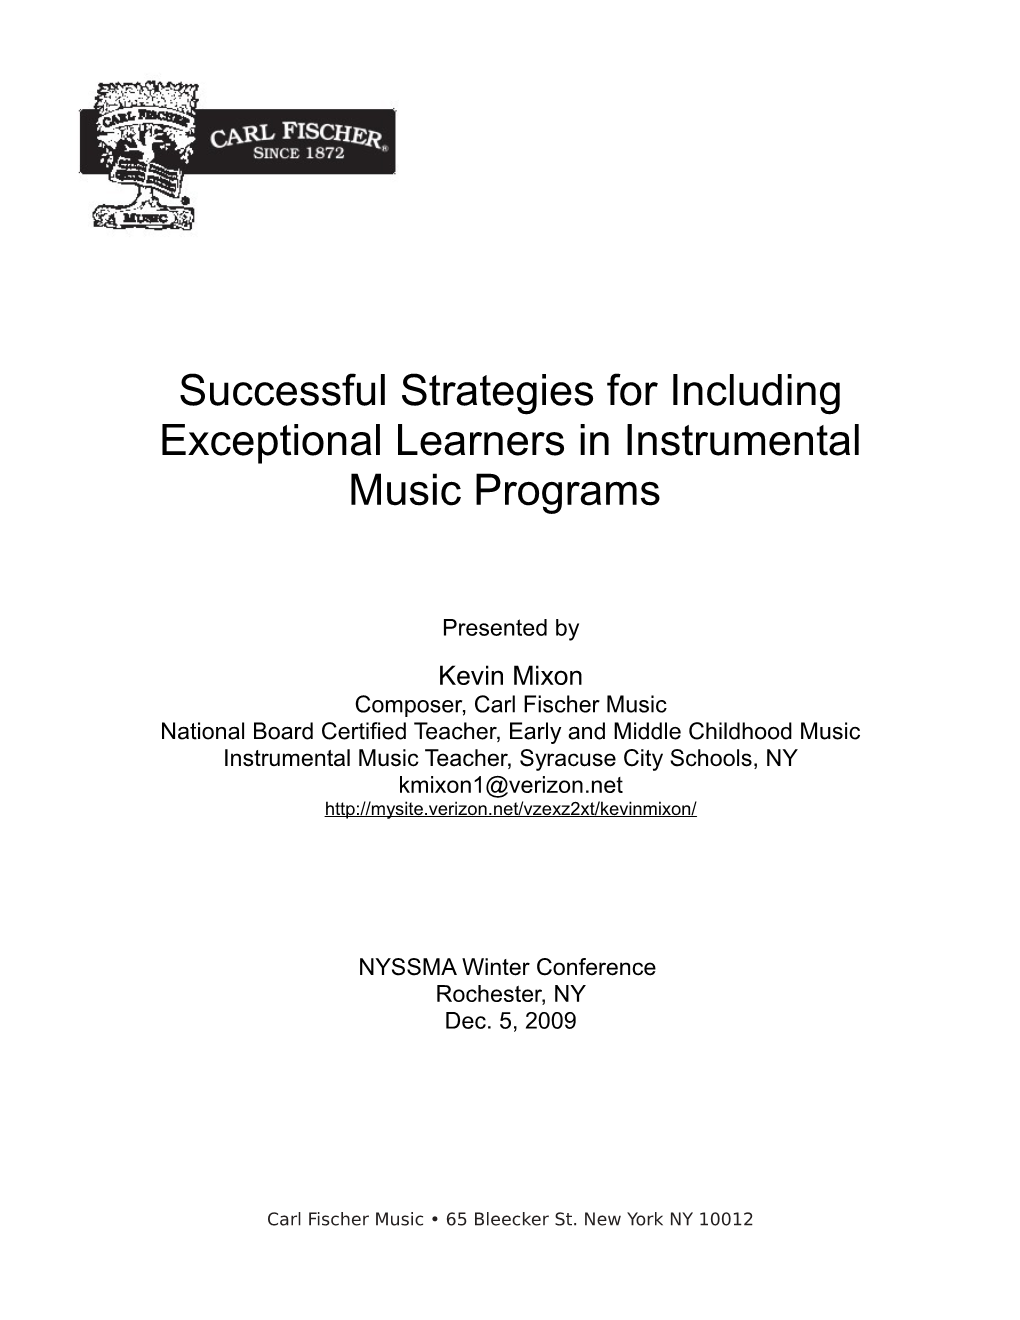 Building Your Instrumental Music Program in Urban and Rural Schools